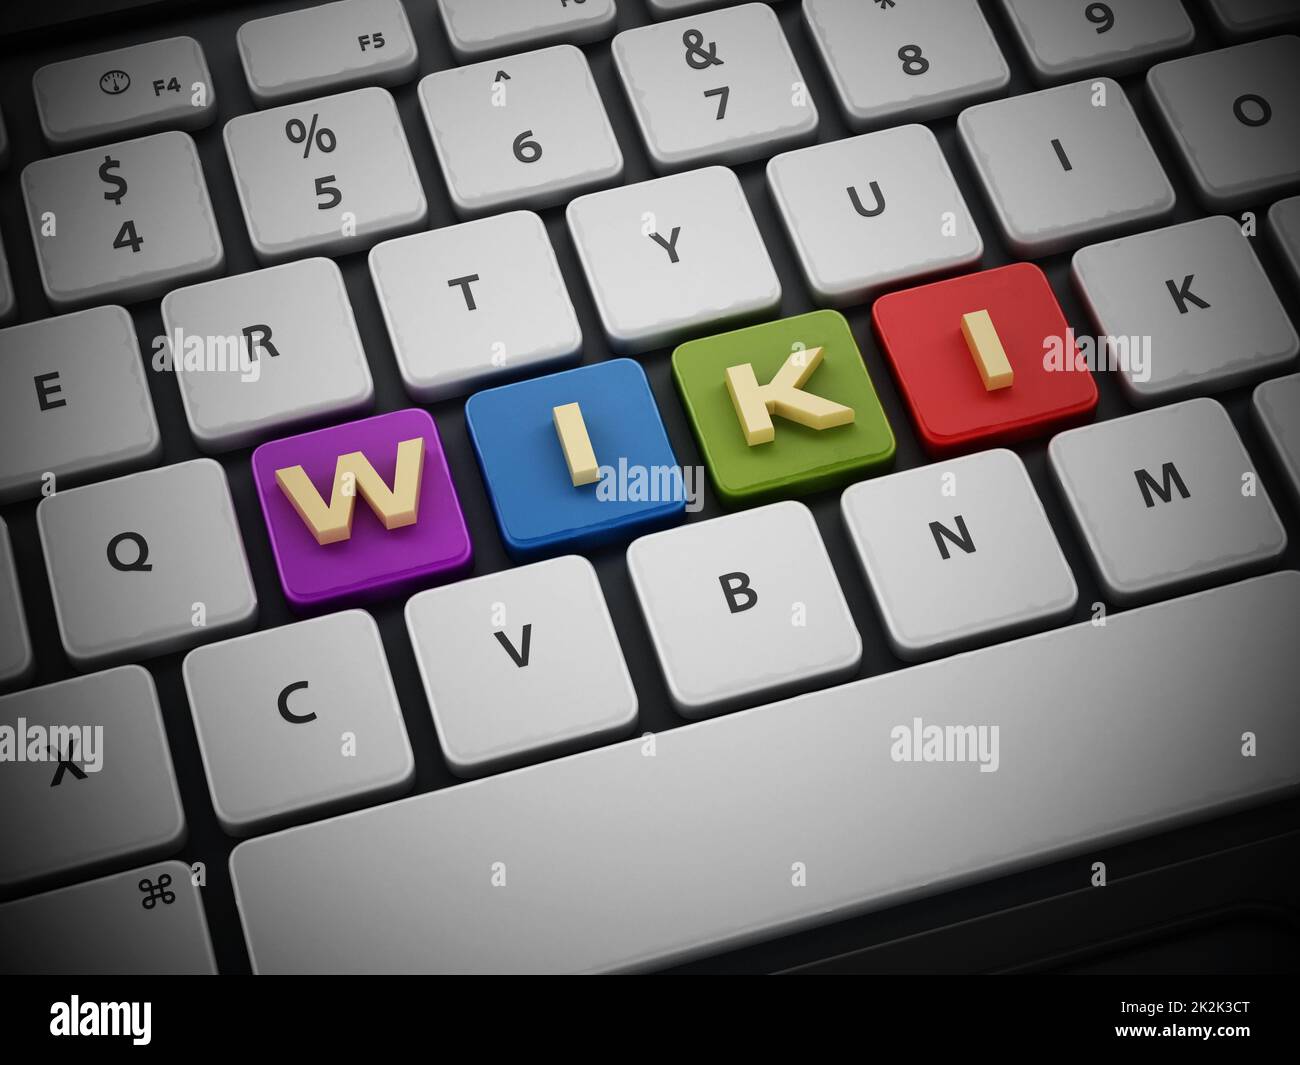 WIKI text on keyboard keys. 3D illustration Stock Photo